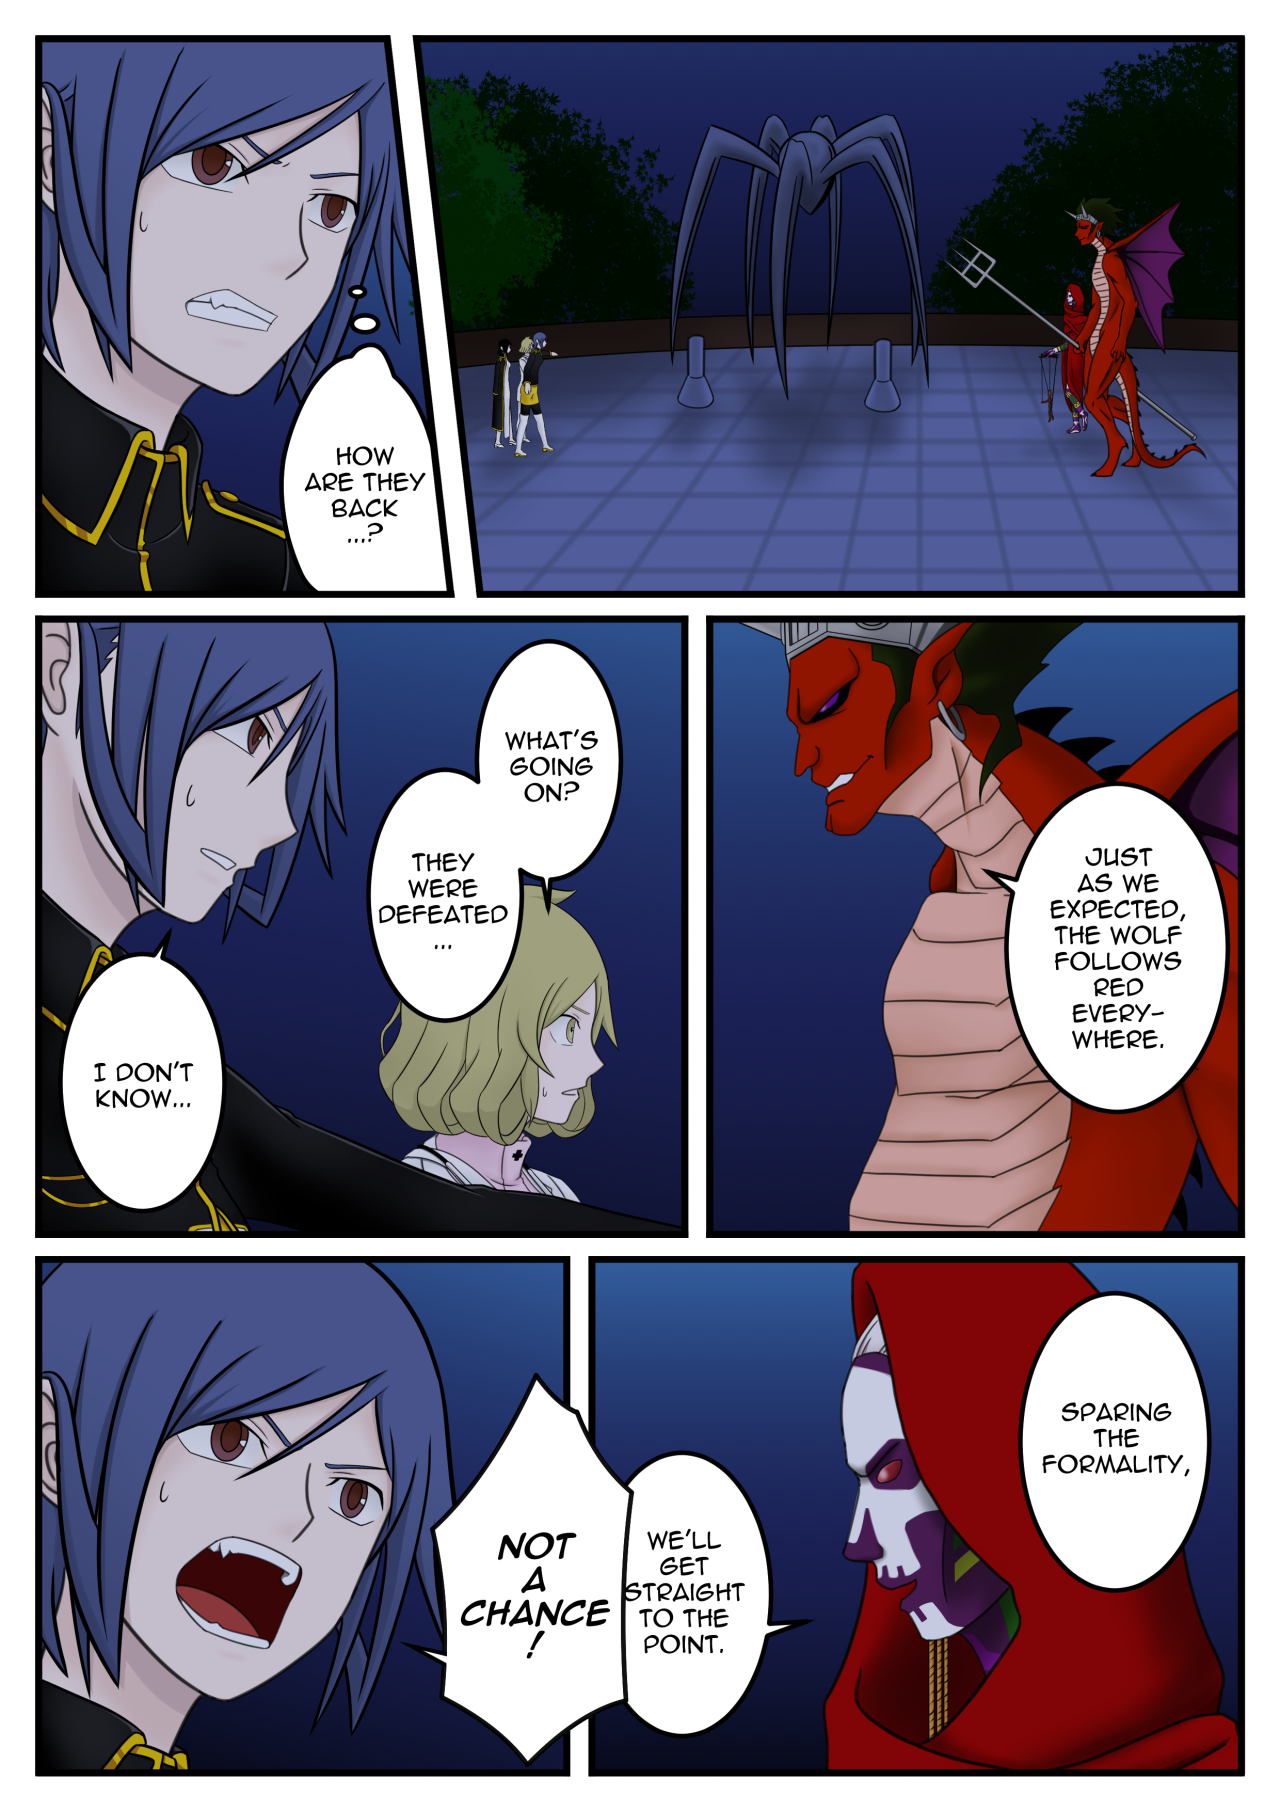 Devil Is Part Timer Manga Volume 15